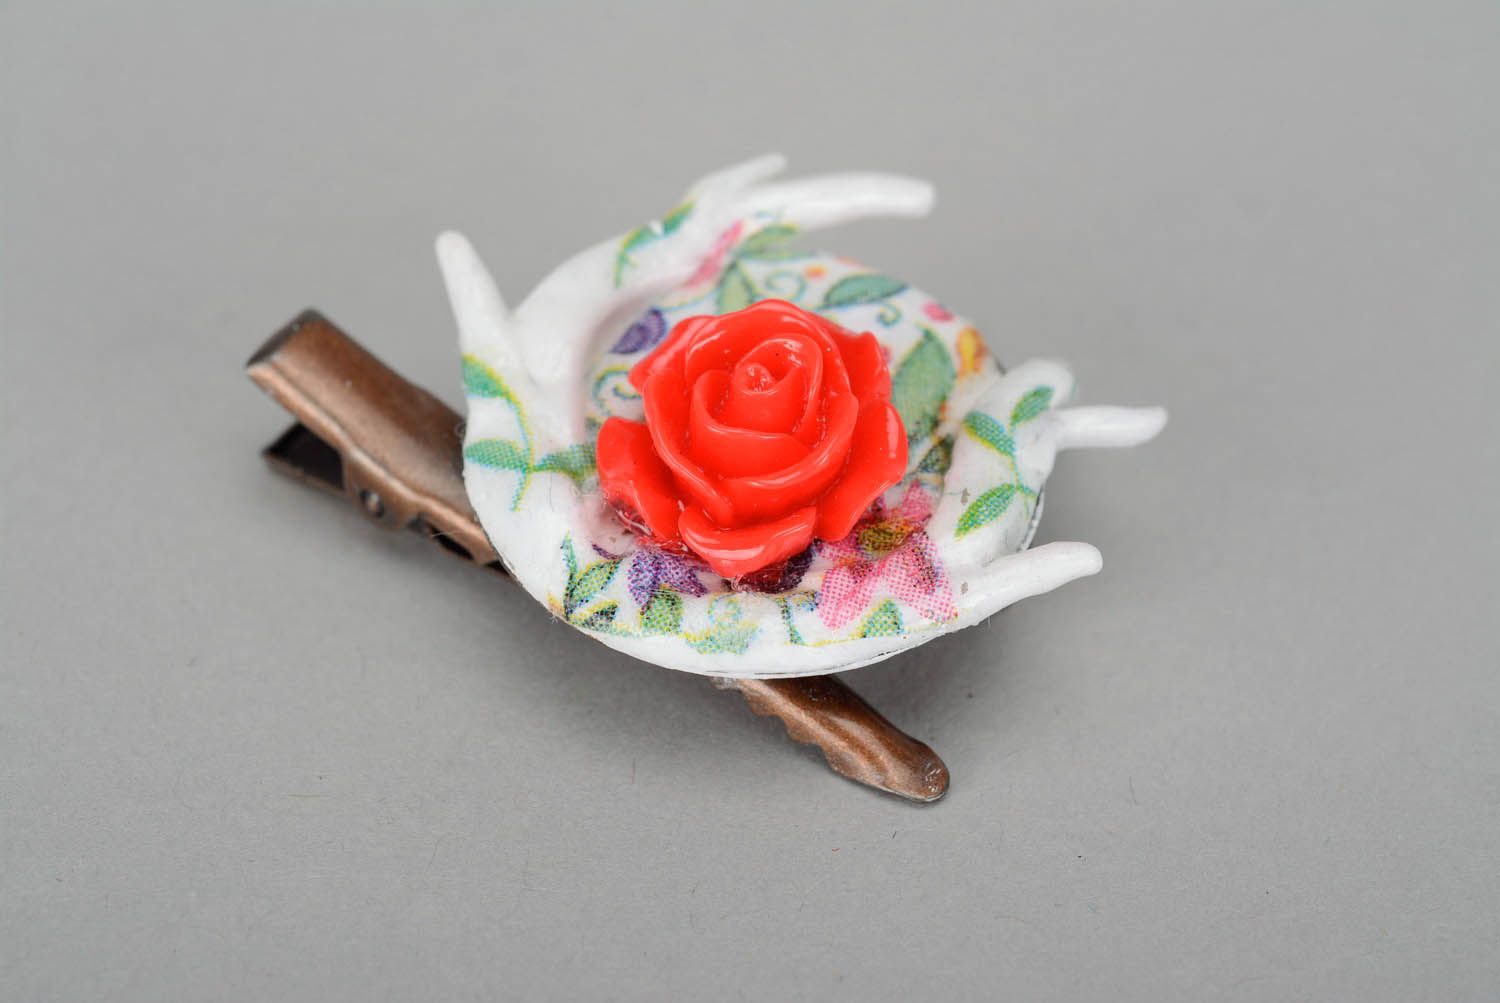 Barrette-broche faite main d'argile polymère 'Rose' photo 1